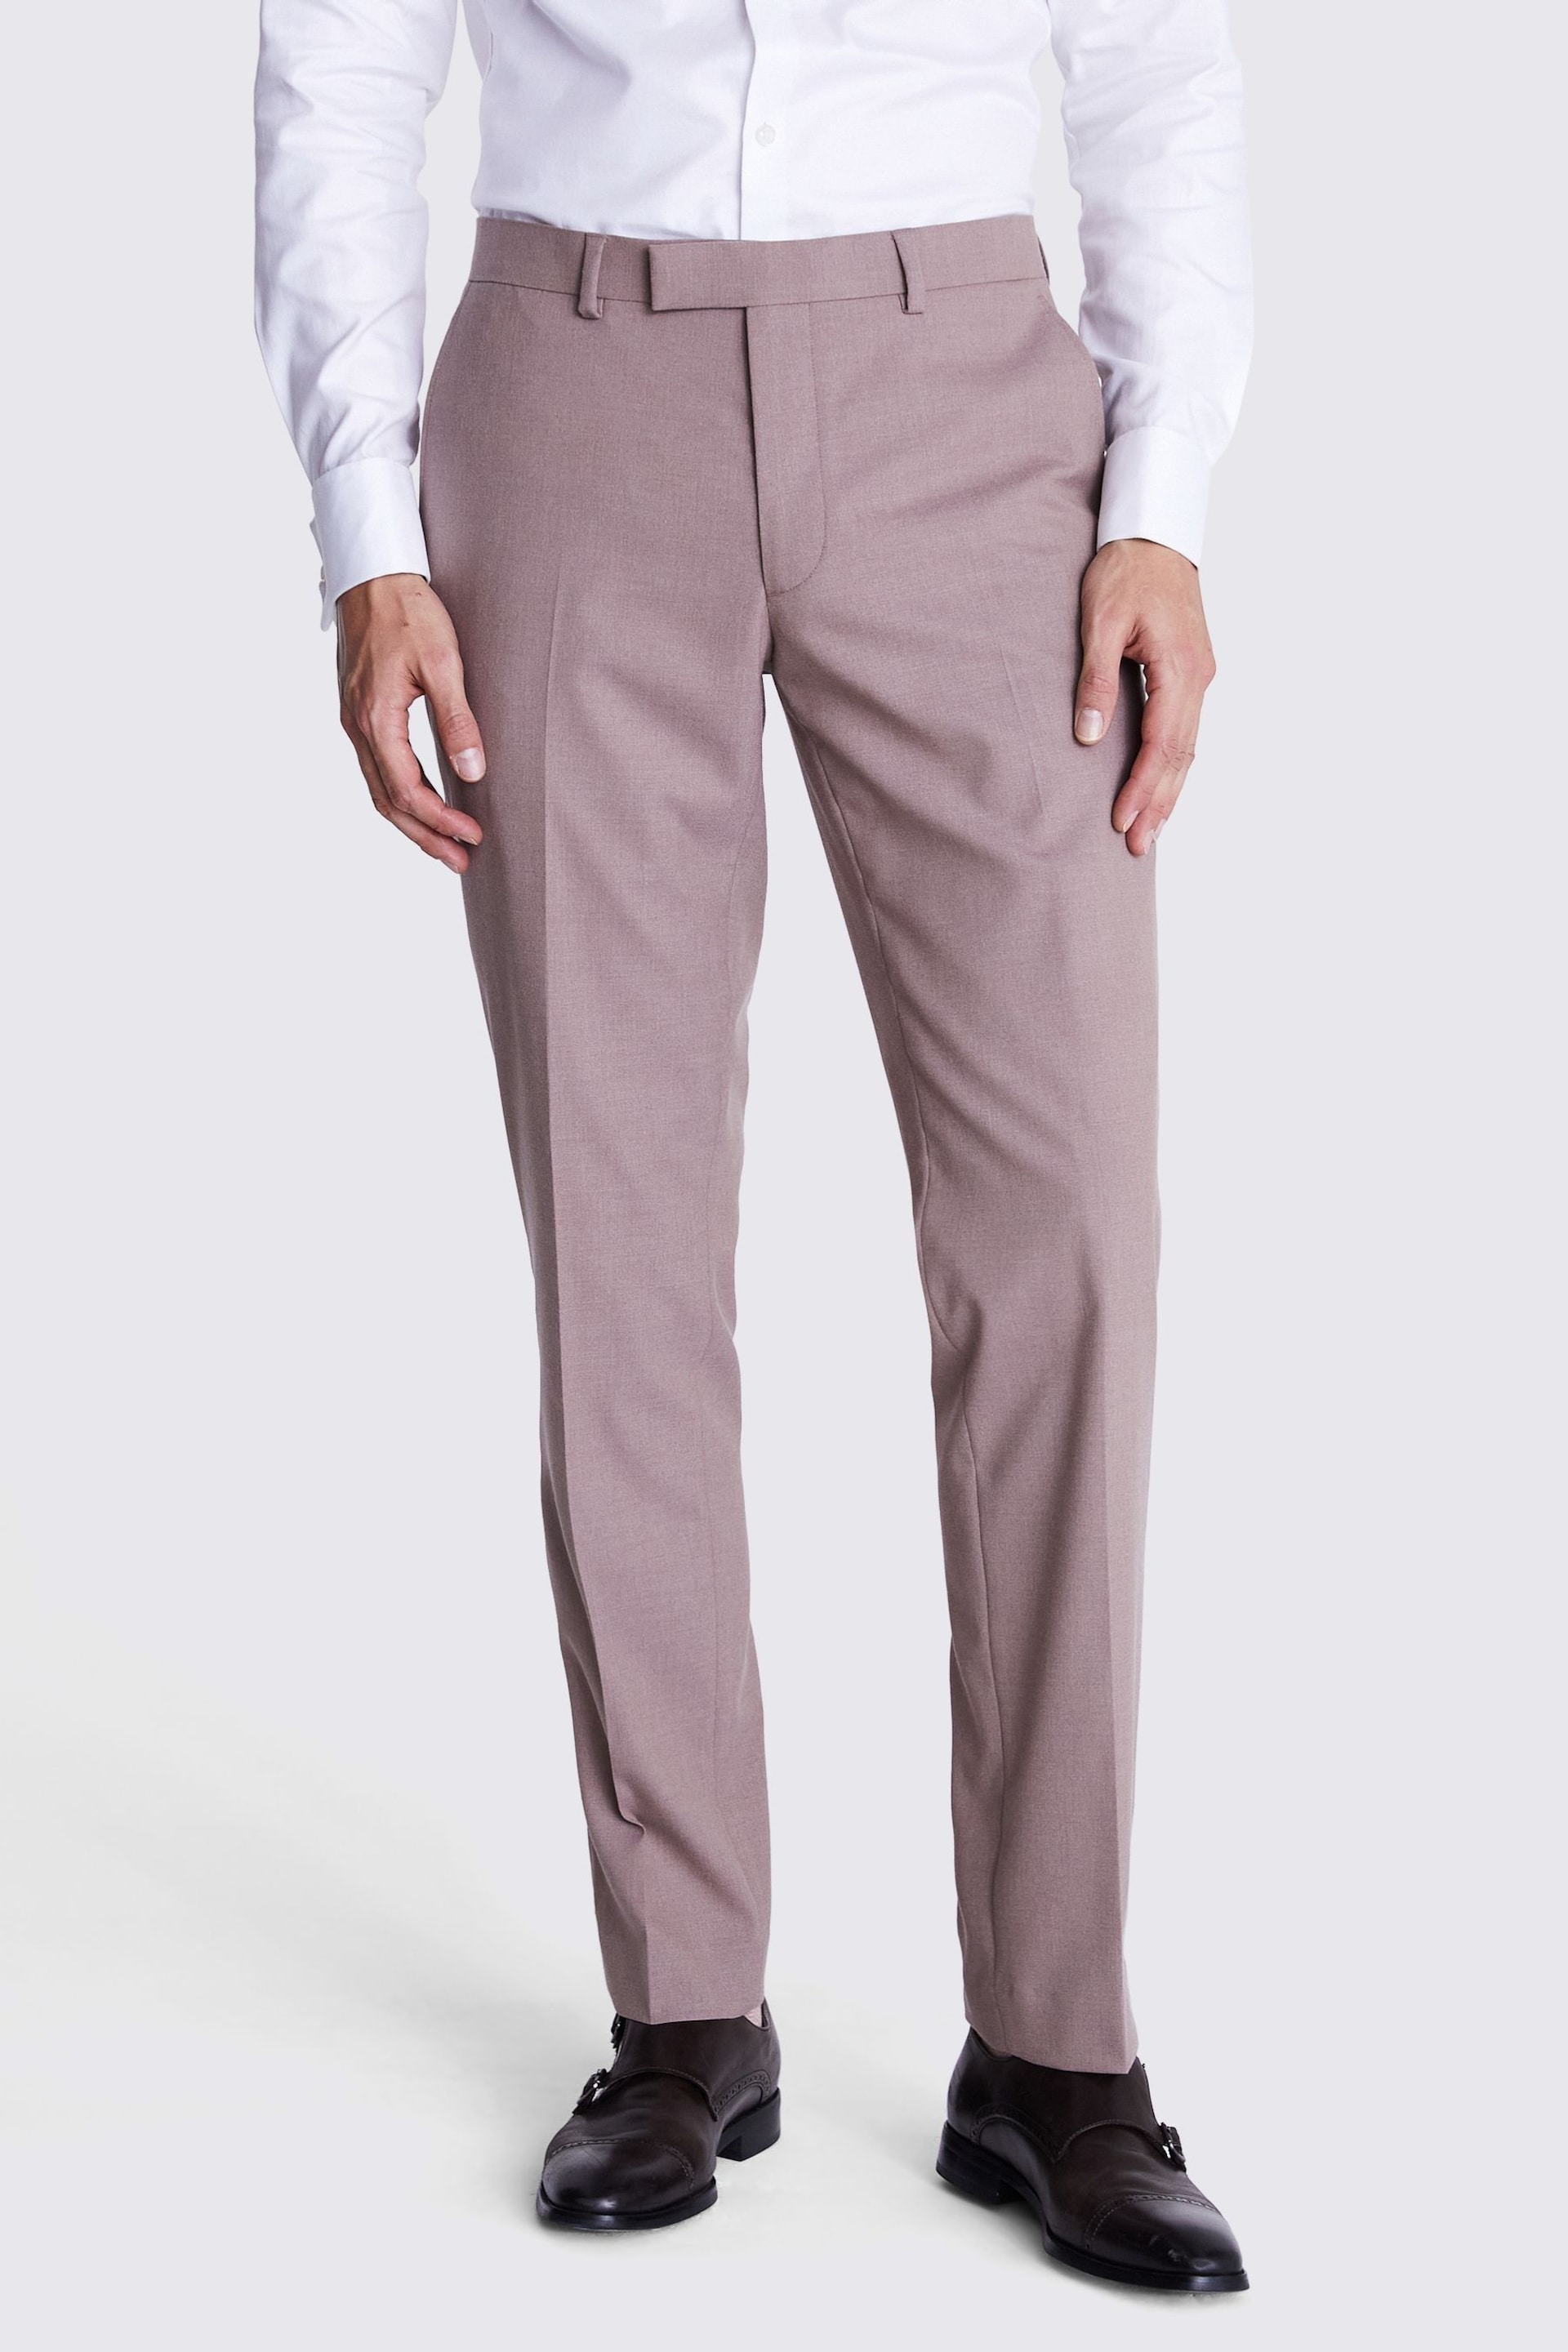 MOSS Dusty Purple Slim Fit Flannel Trousers - Image 1 of 3